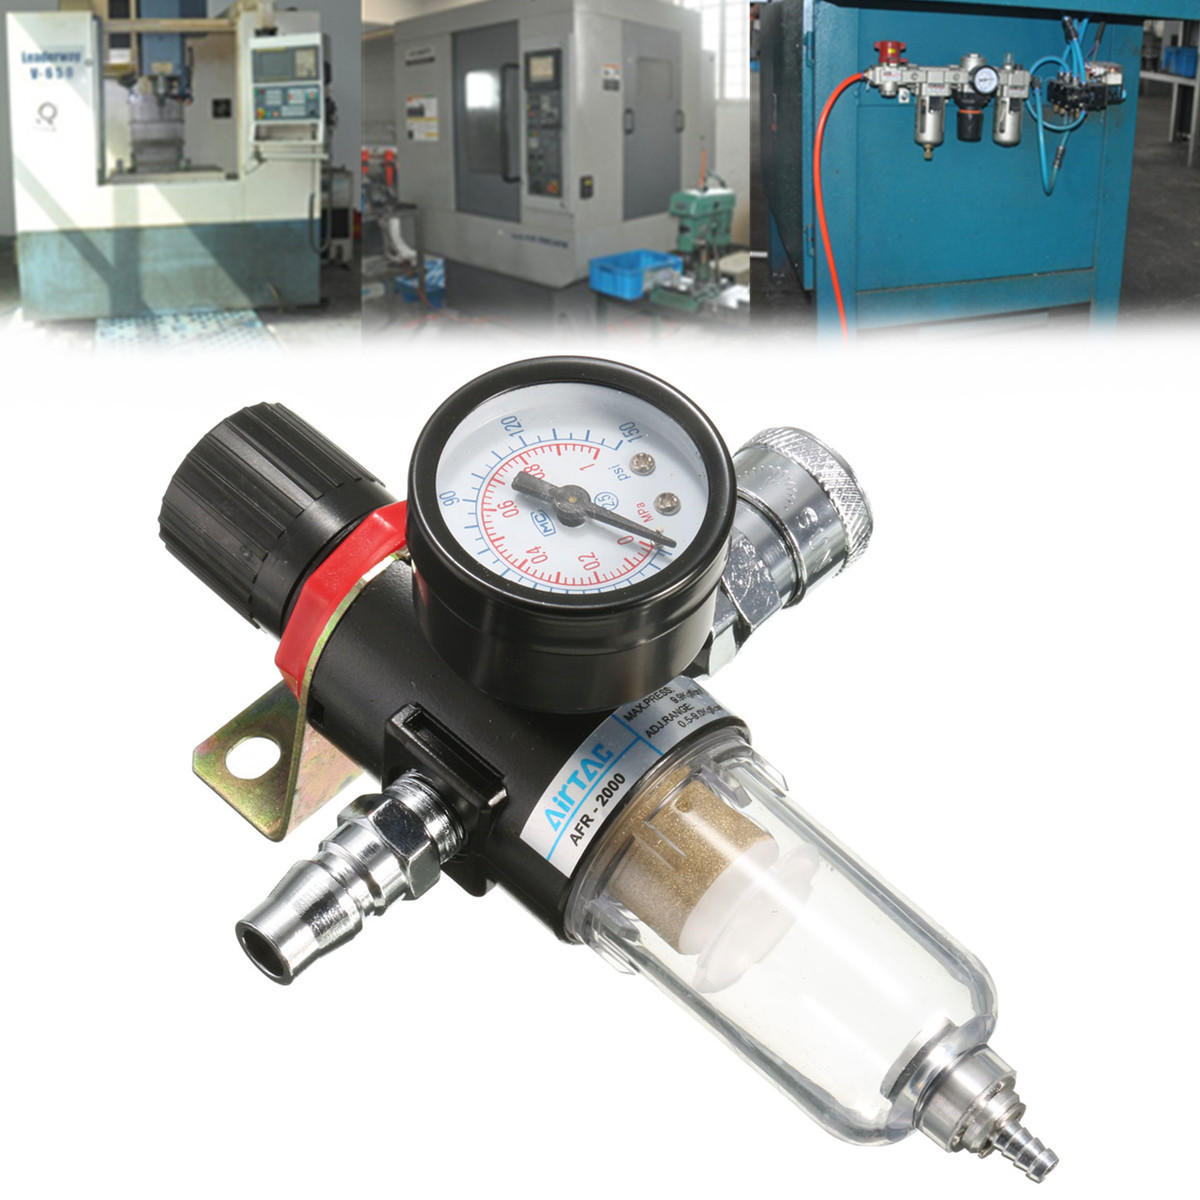 

AFR-2000 1/4" Air Compressor Filter Water Separator Trap Tools Kit Regulator Gauge